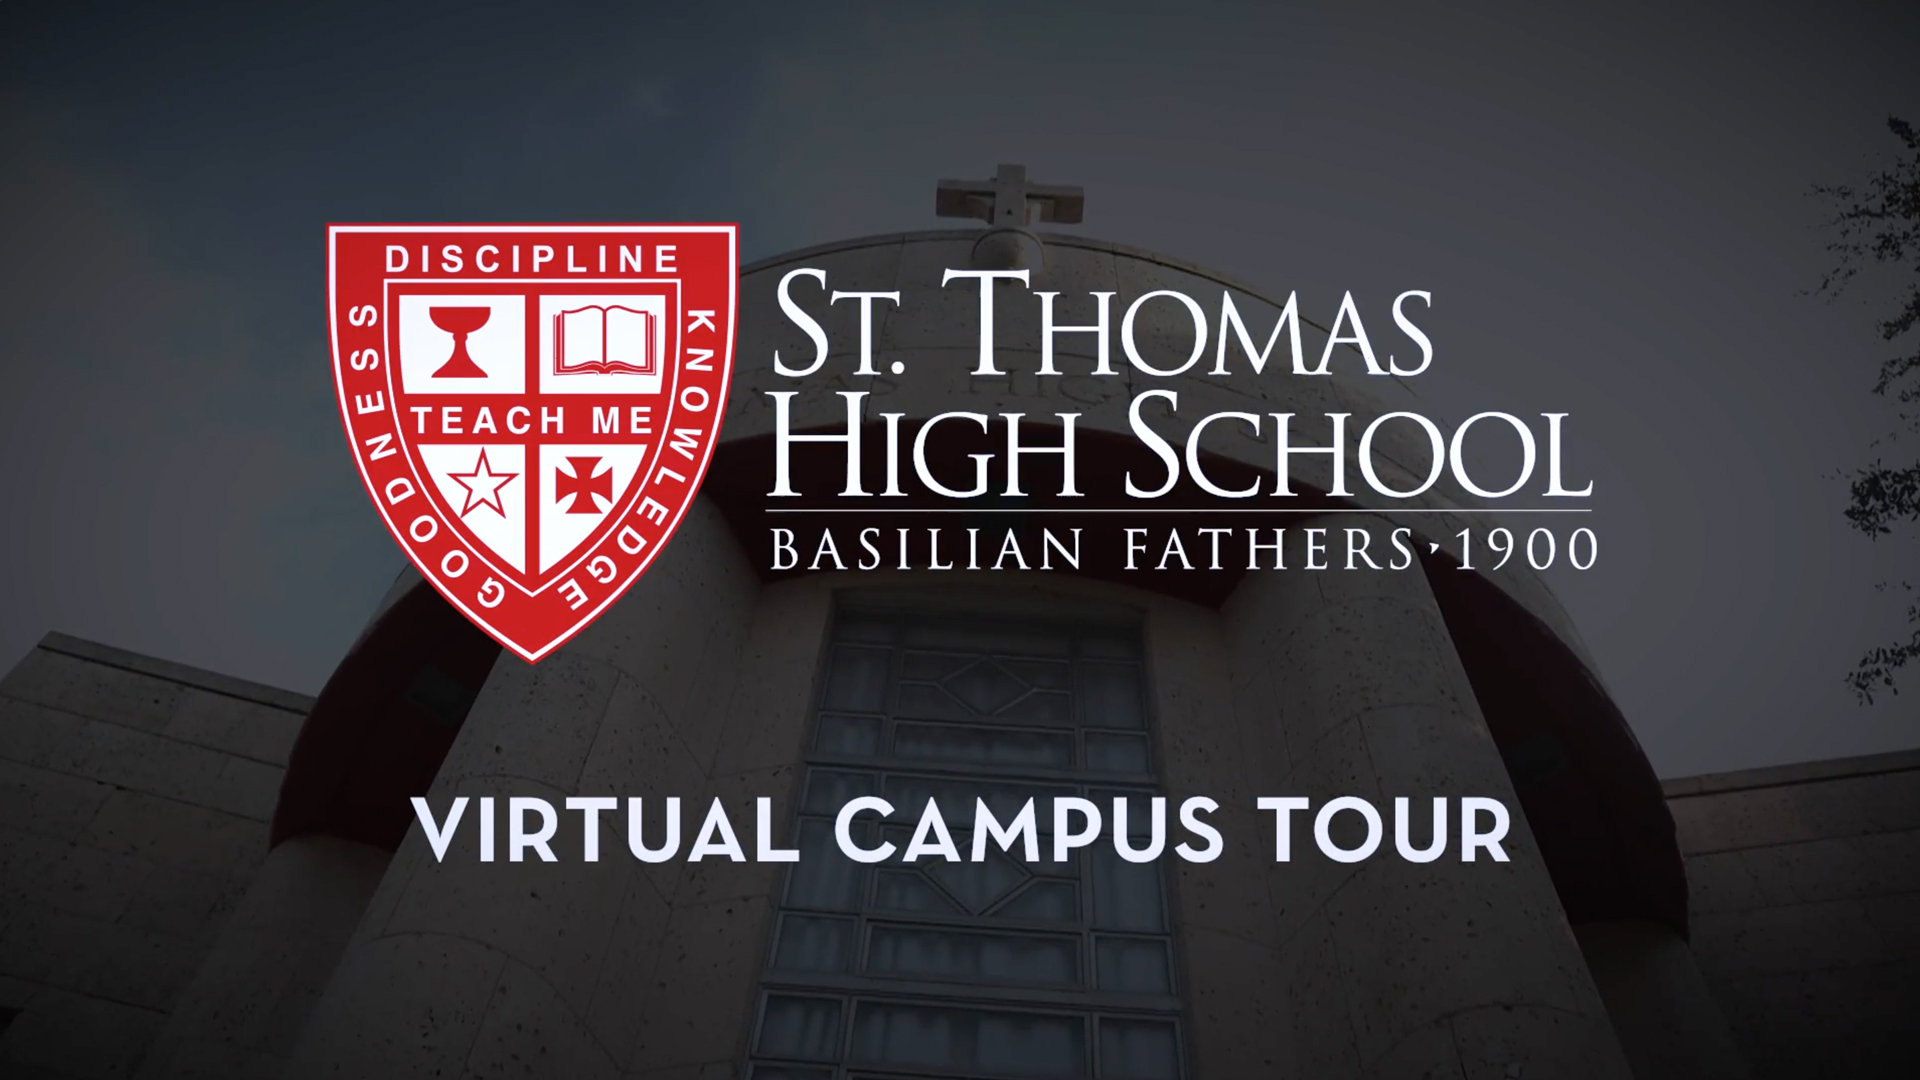 St. Thomas High School “Virtual Campus Tour”